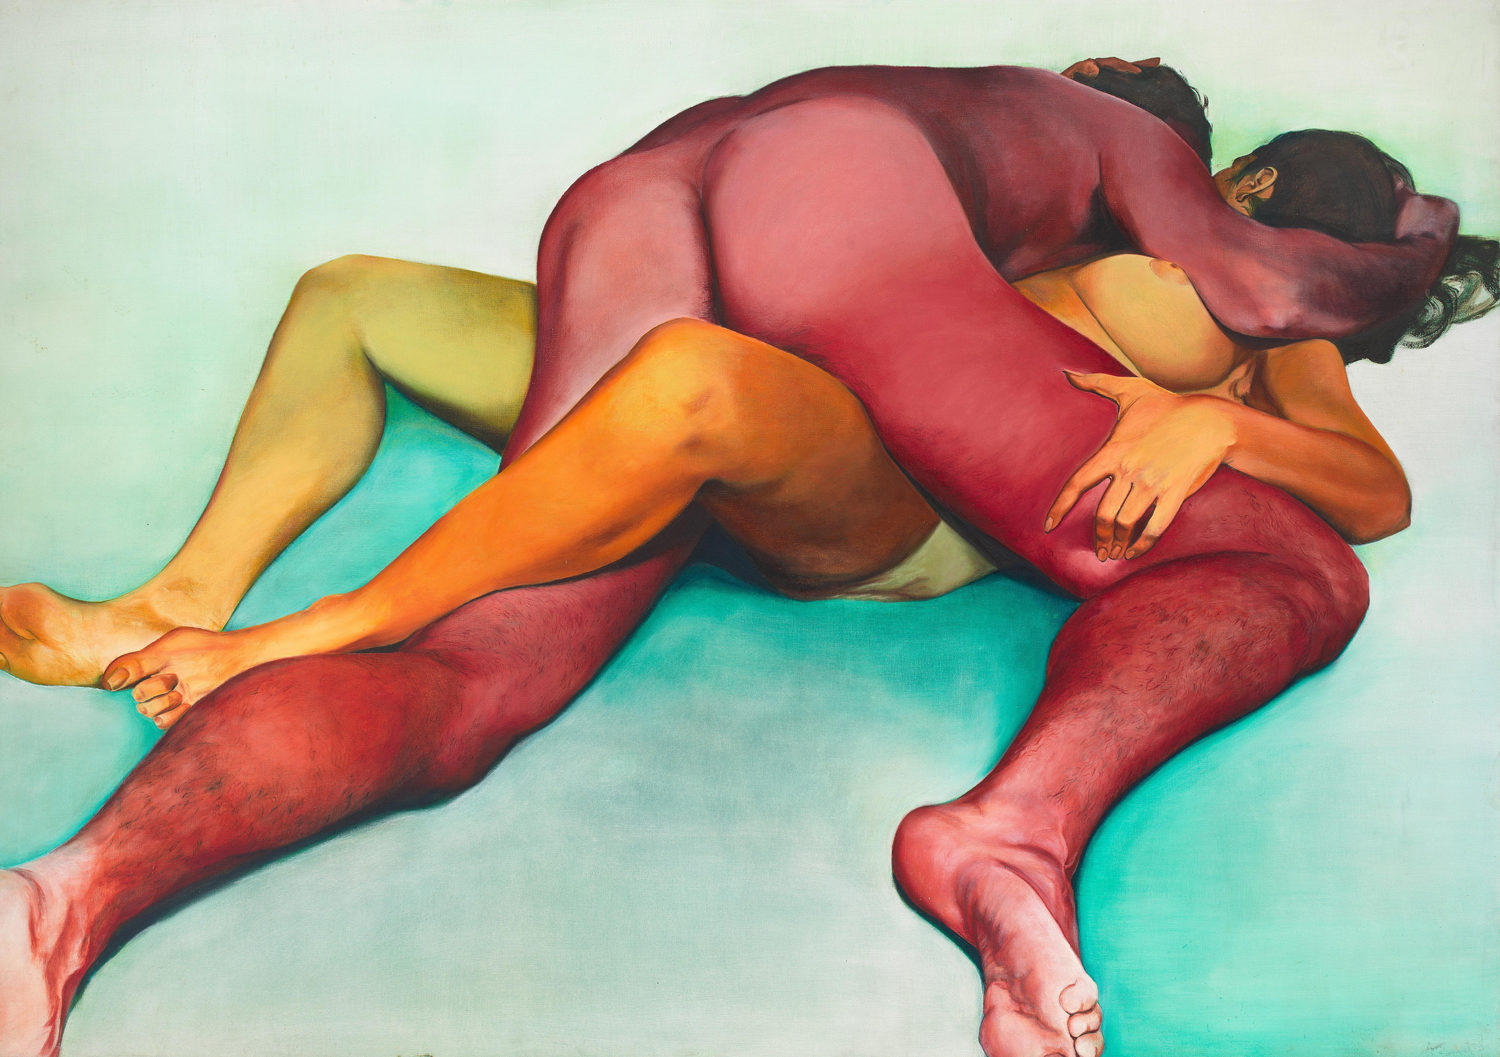 Joan Semmel and Sylvia Sleigh: Two Feminist Views on Male Intimacy - AWARE Artistes femmes / women artists